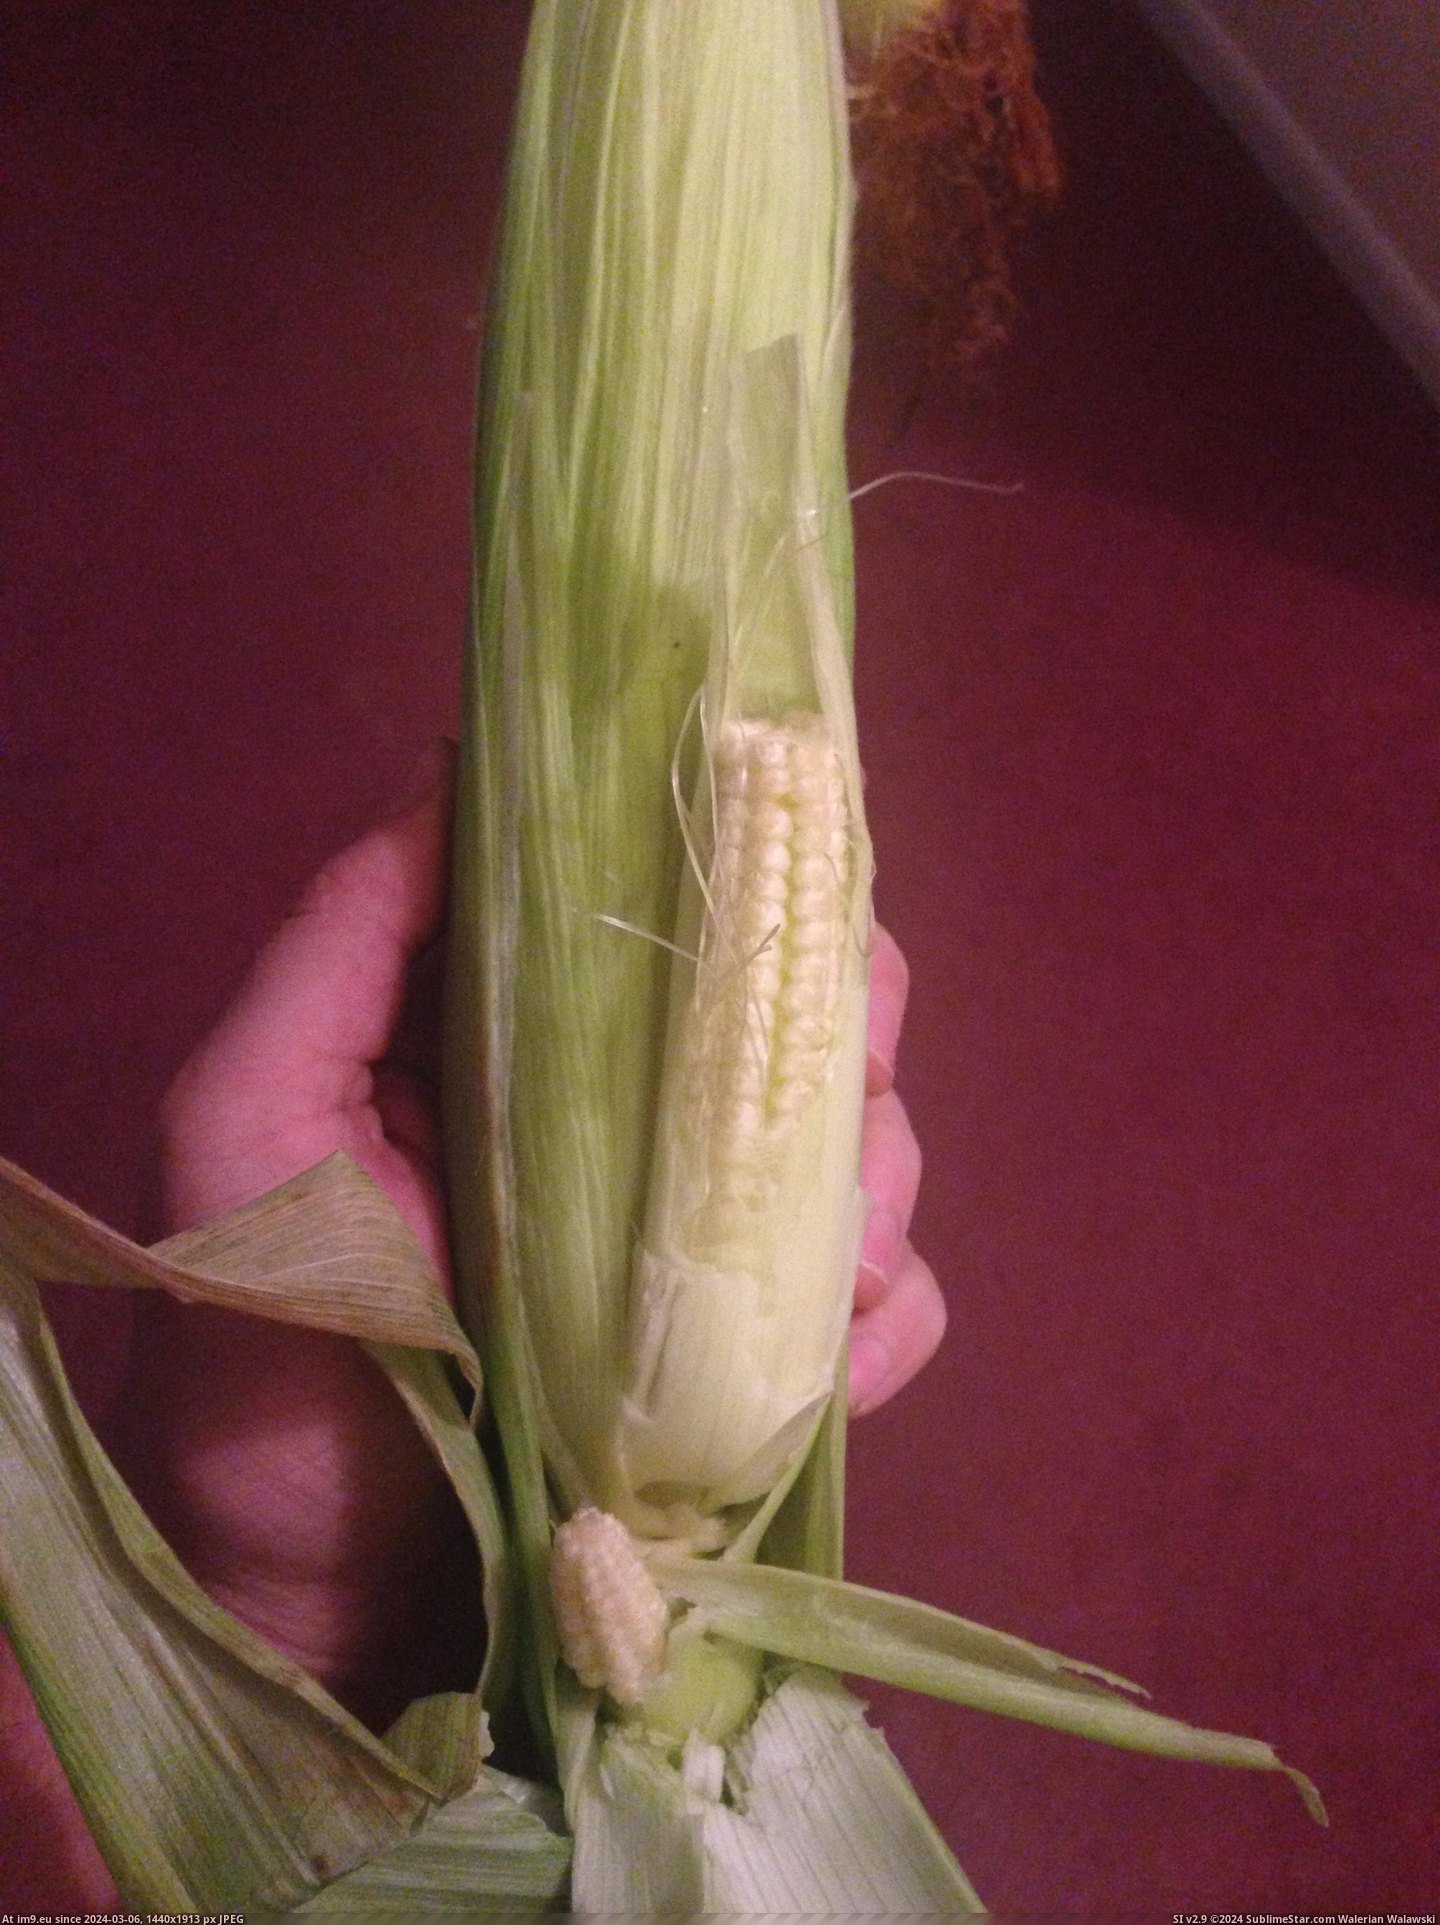 #Had #Smaller #Corn #Growing [Mildlyinteresting] My corn had a smaller and smaller corn growing inside it Pic. (Image of album My r/MILDLYINTERESTING favs))